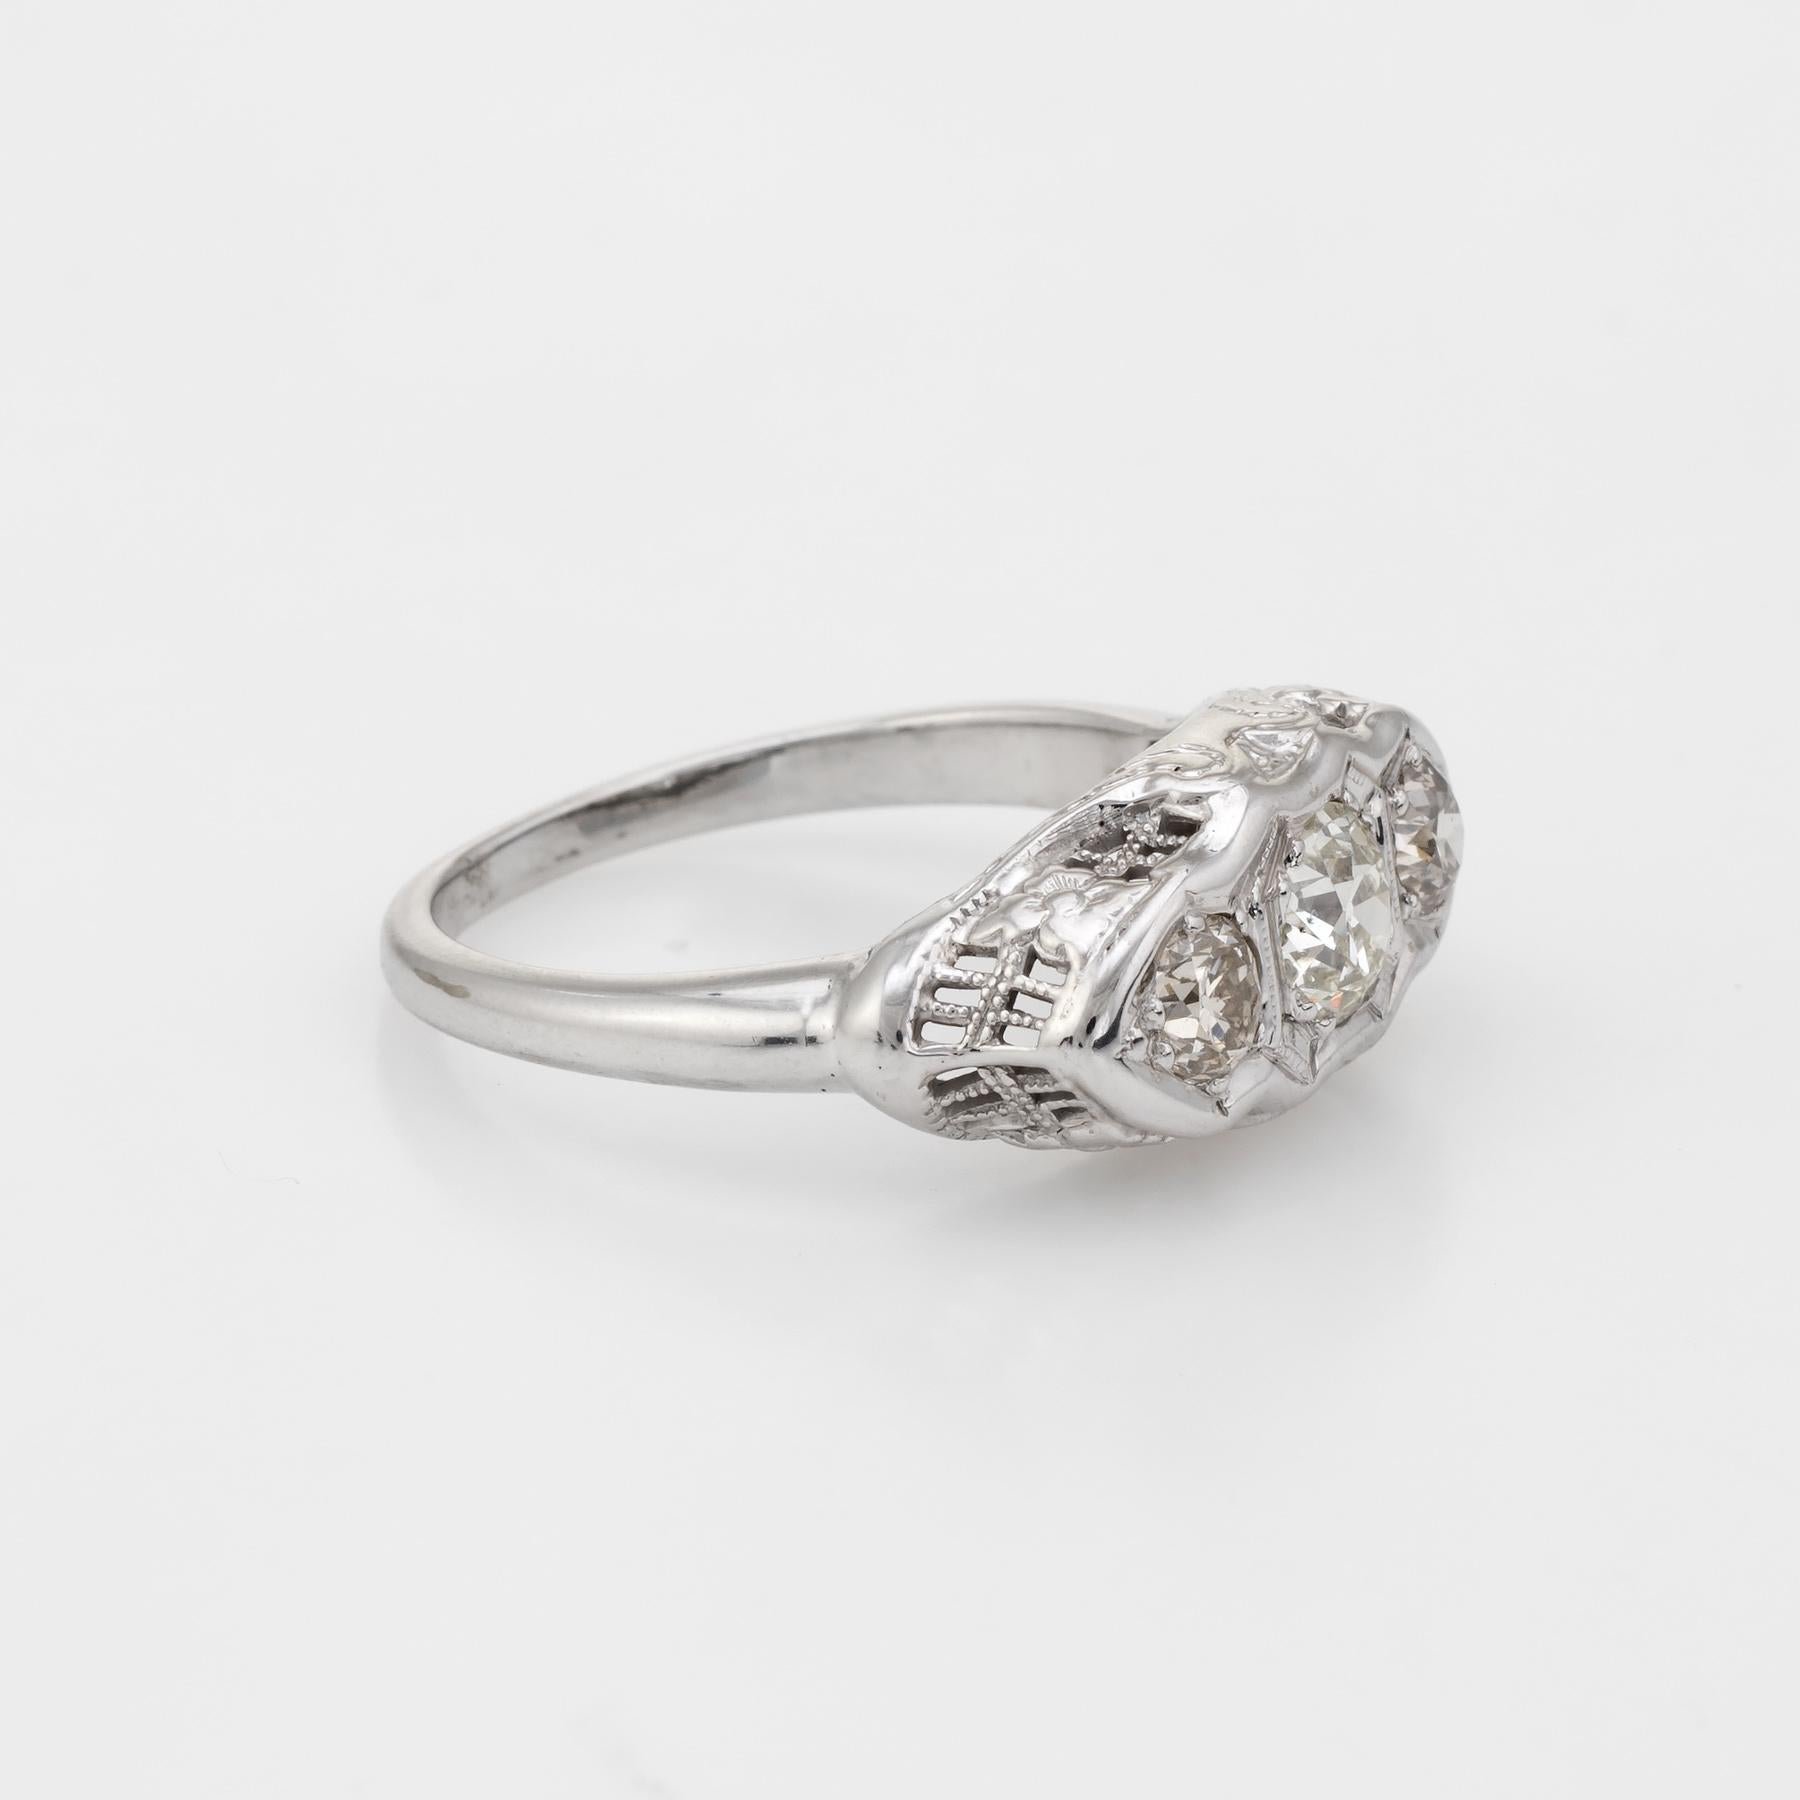 Art Deco Antique Deco 3 Diamond Ring Trilogy Vintage 14 Karat White Gold Filigree Jewelry